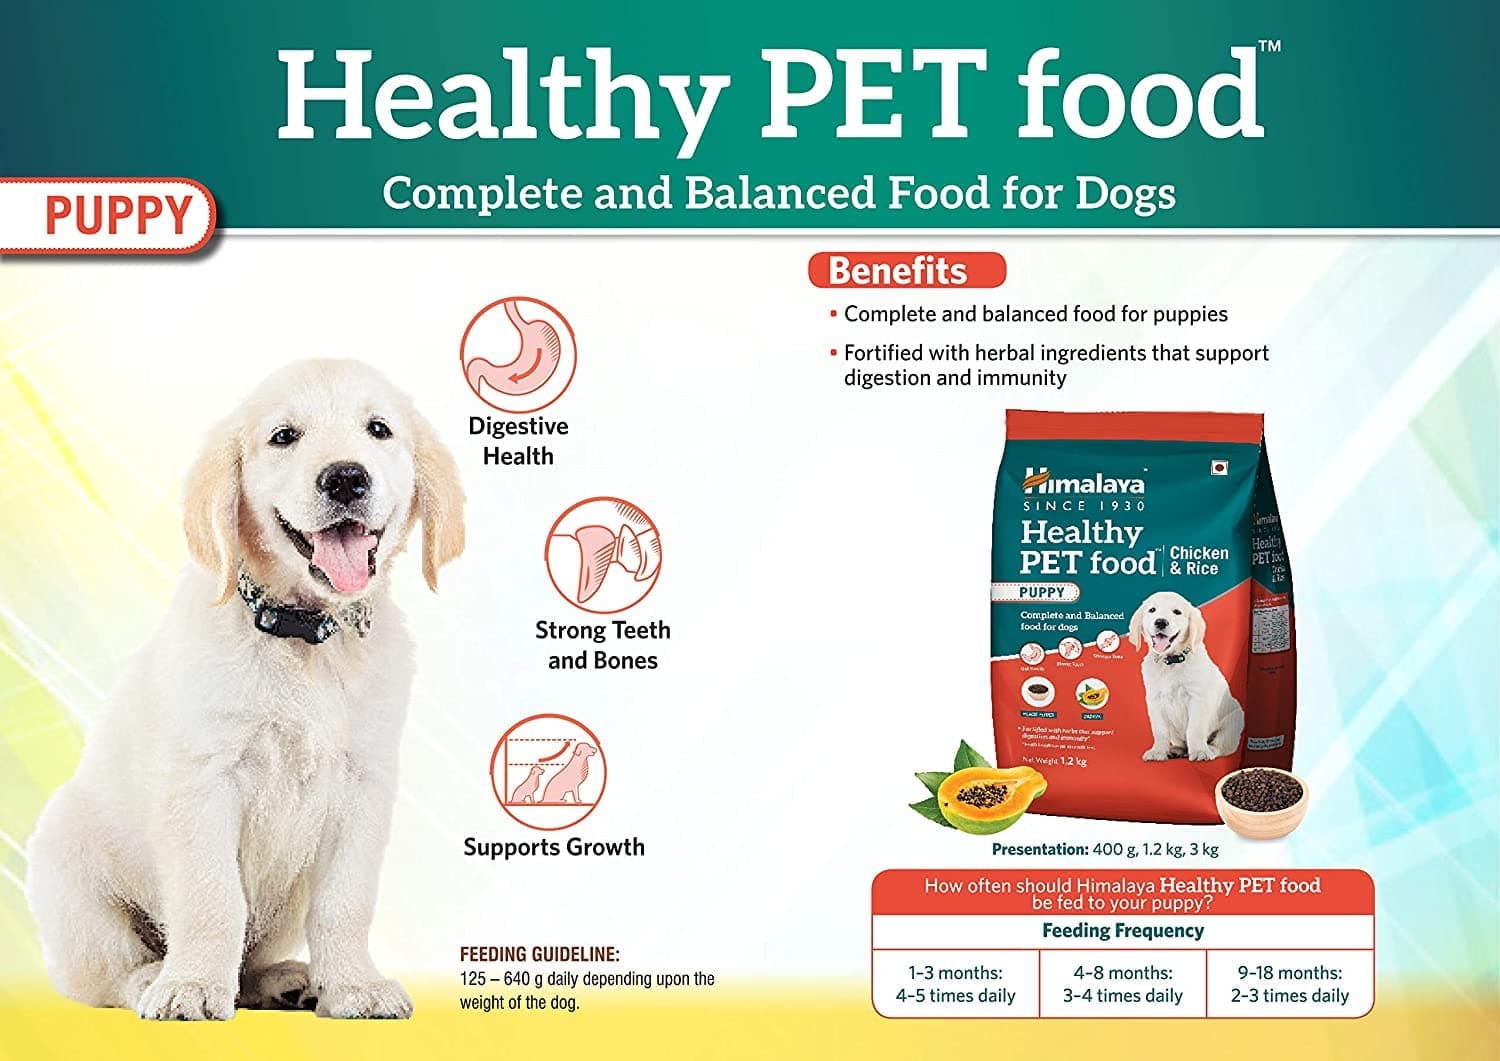 Himalaya Chicken & Rice Healthy Pet Puppy Dry Food